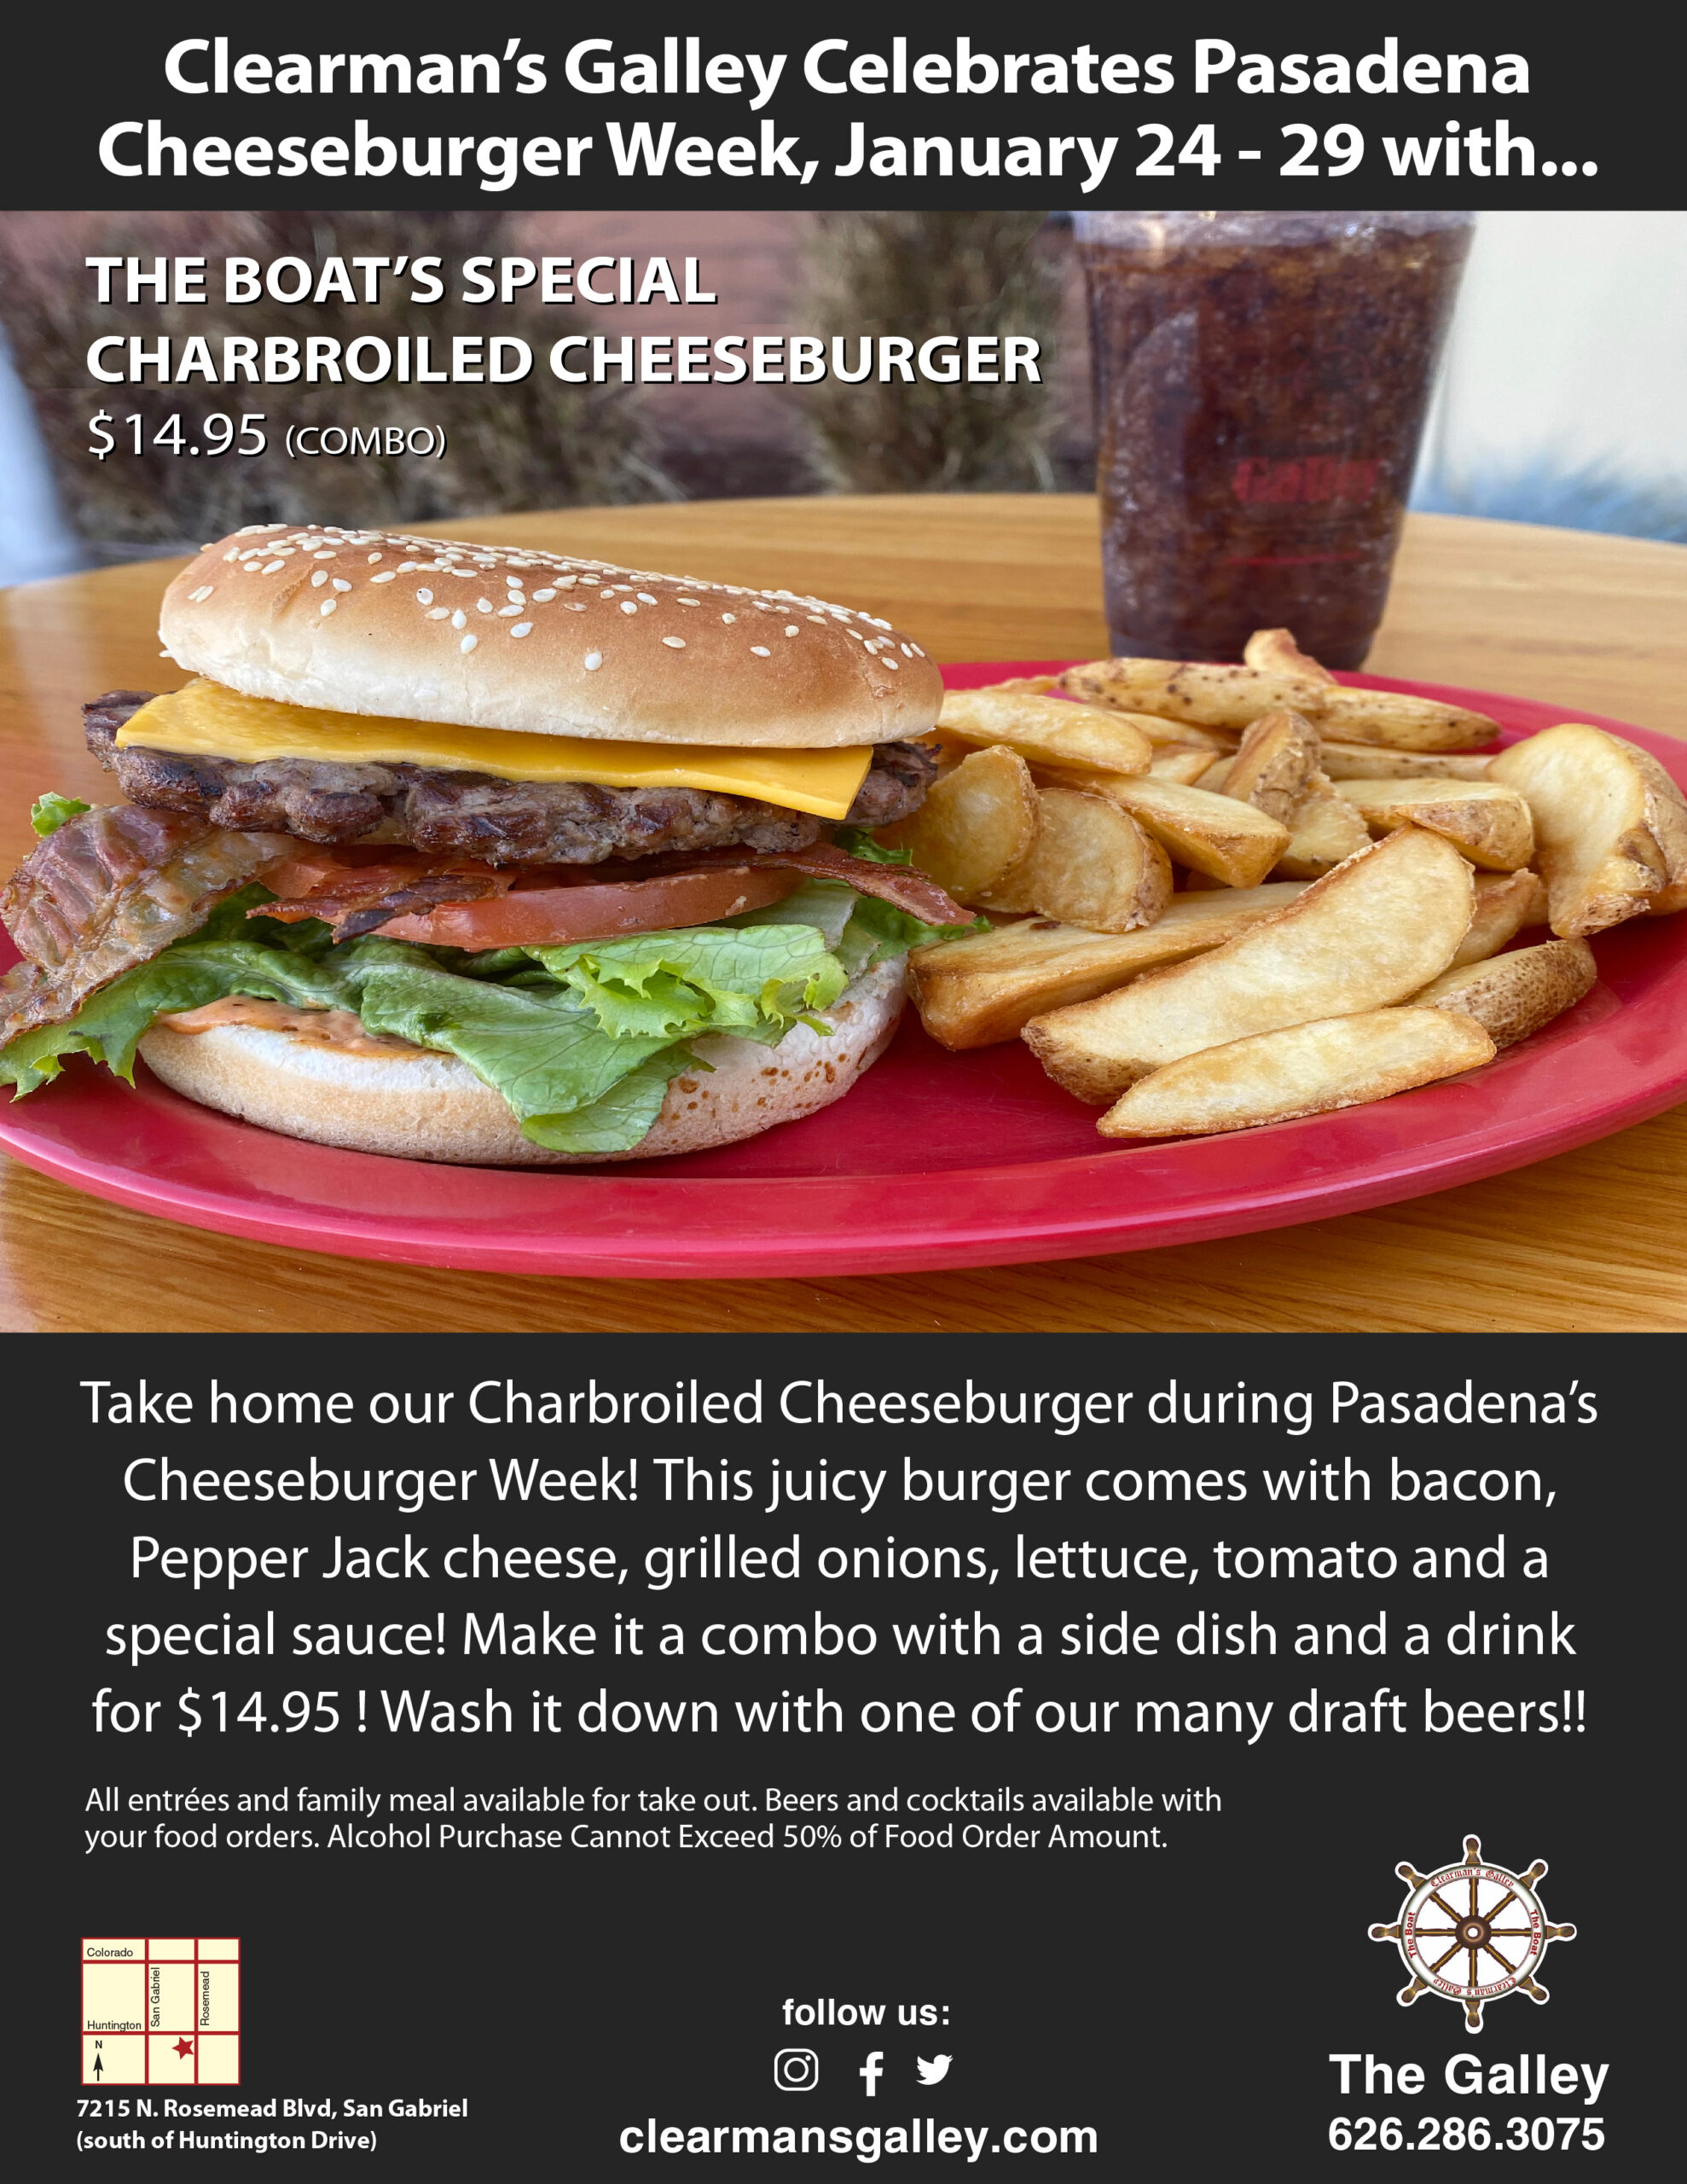 Clearman's Galley Celebrates Pasadena Cheeseburger Week 